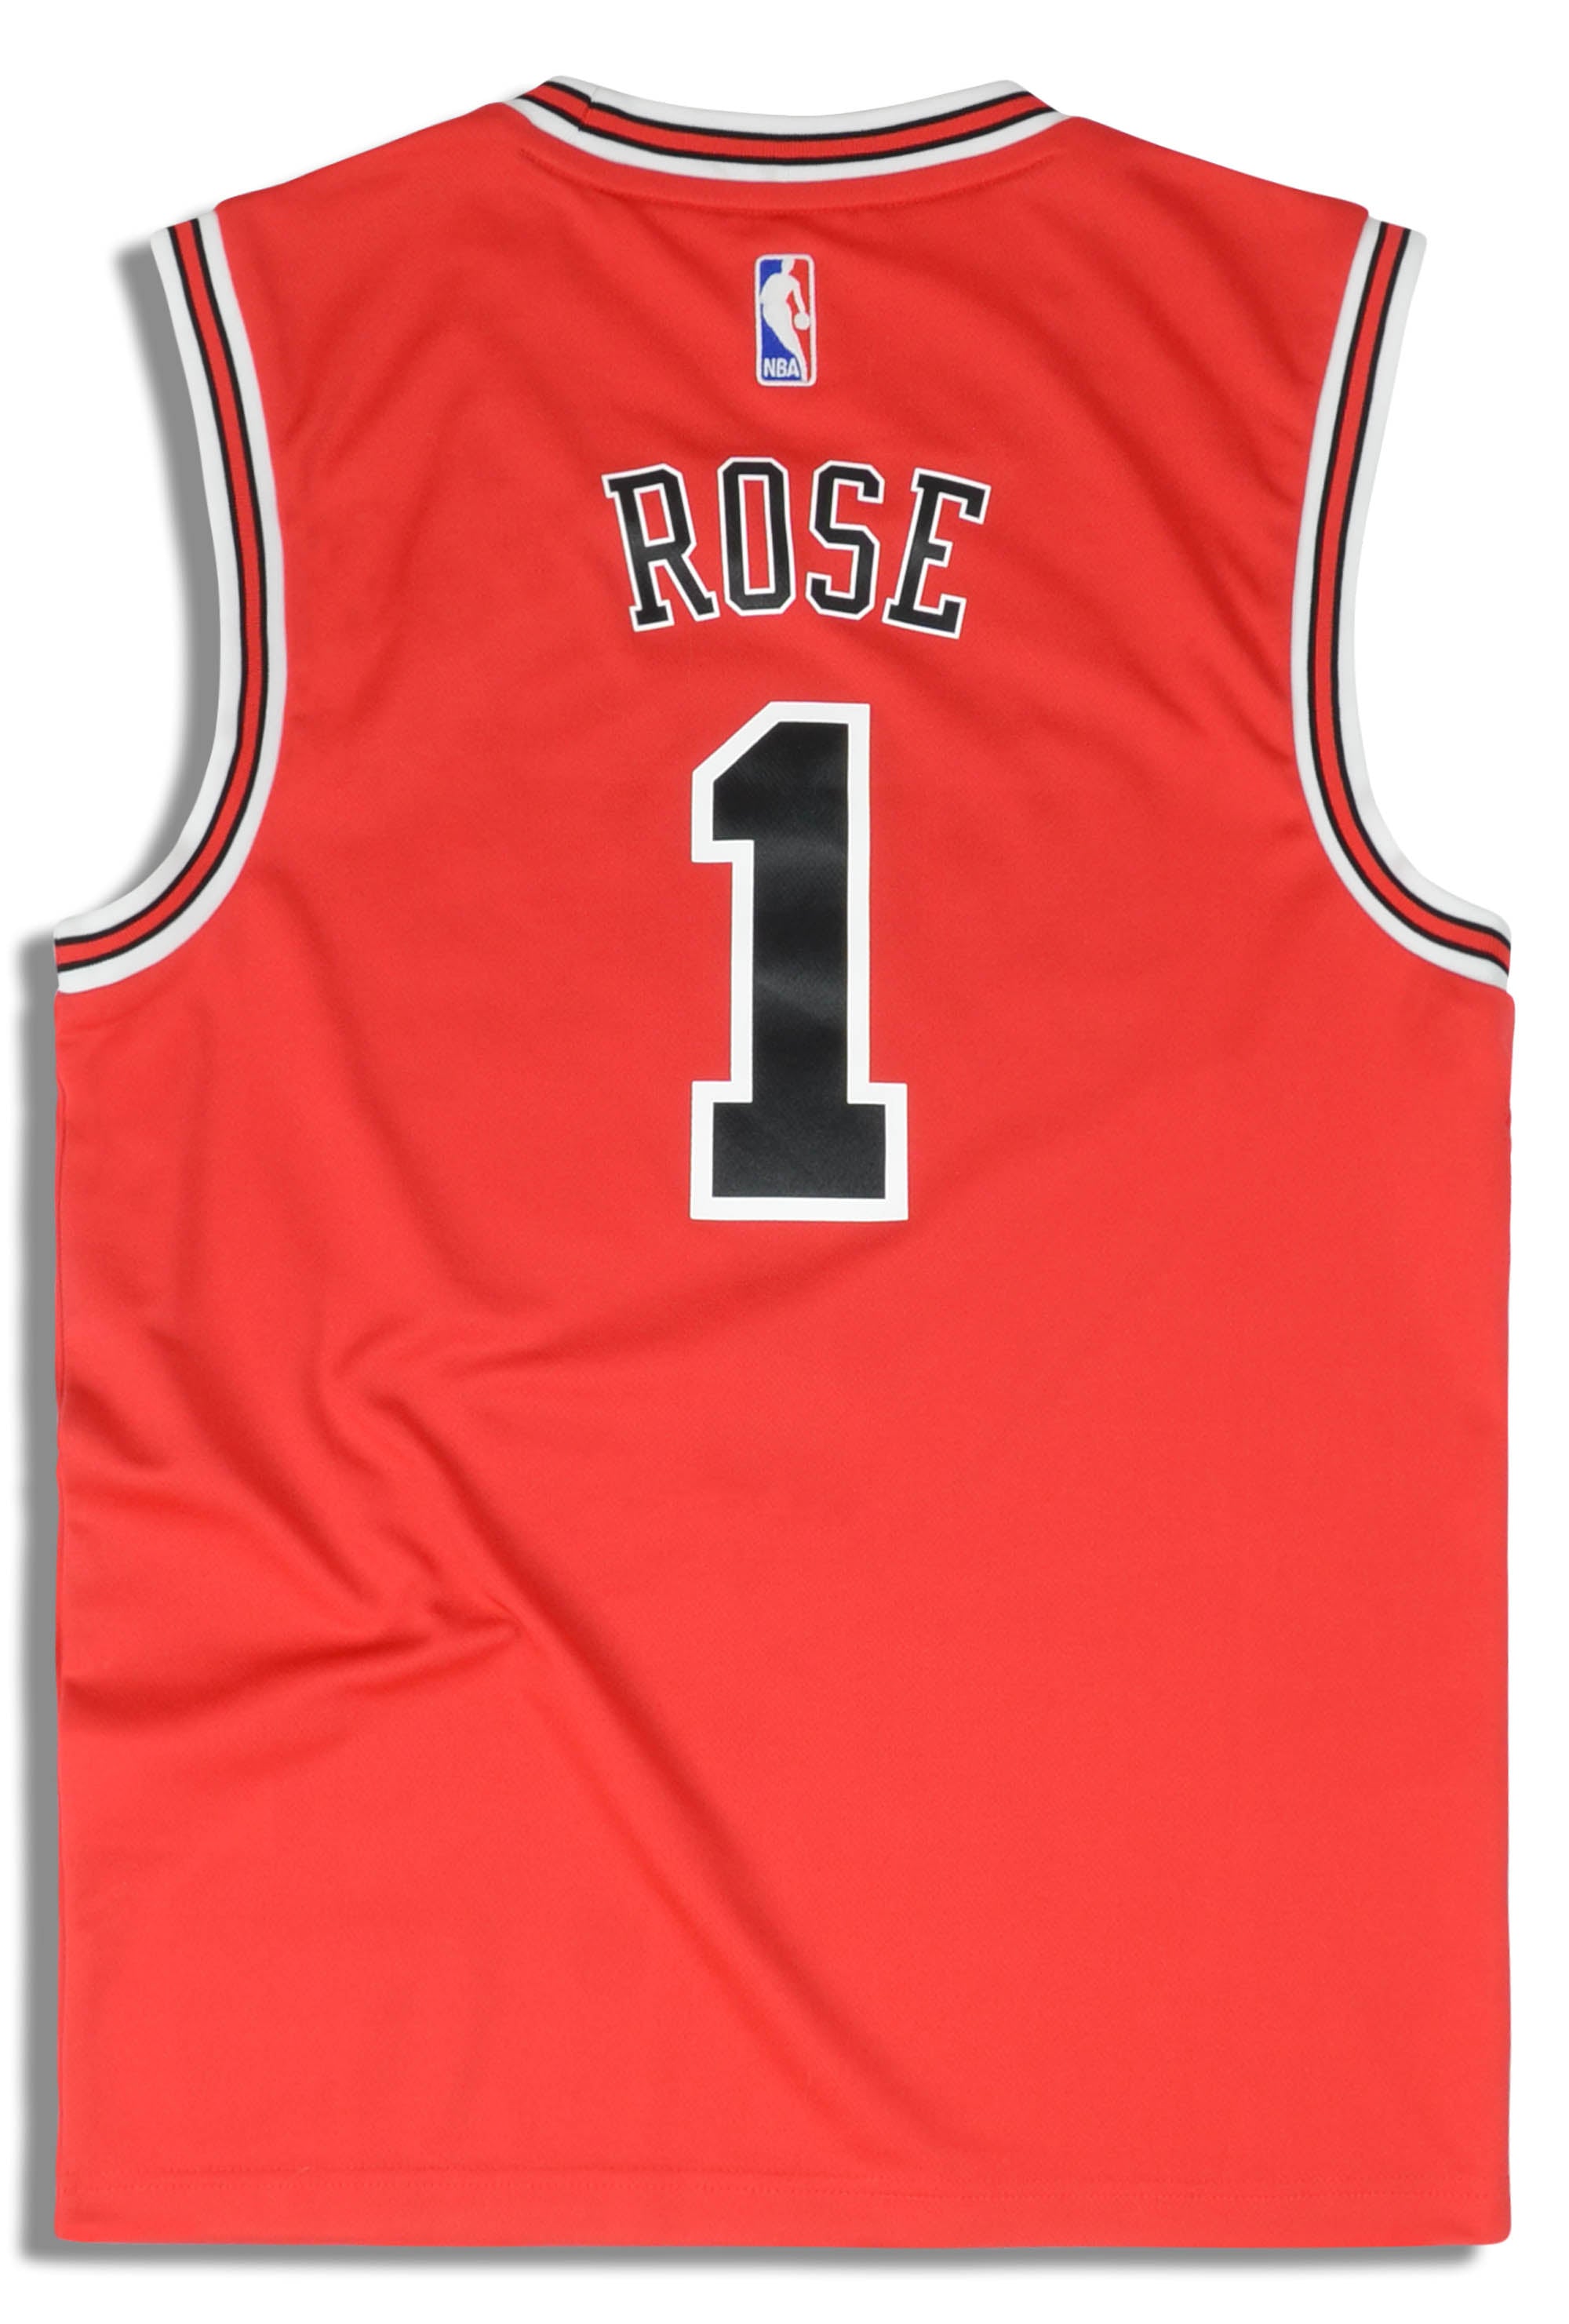 Adidas Authentics Derrick Rose Chicago Bulls Men's Jersey Black #1 Size XXL